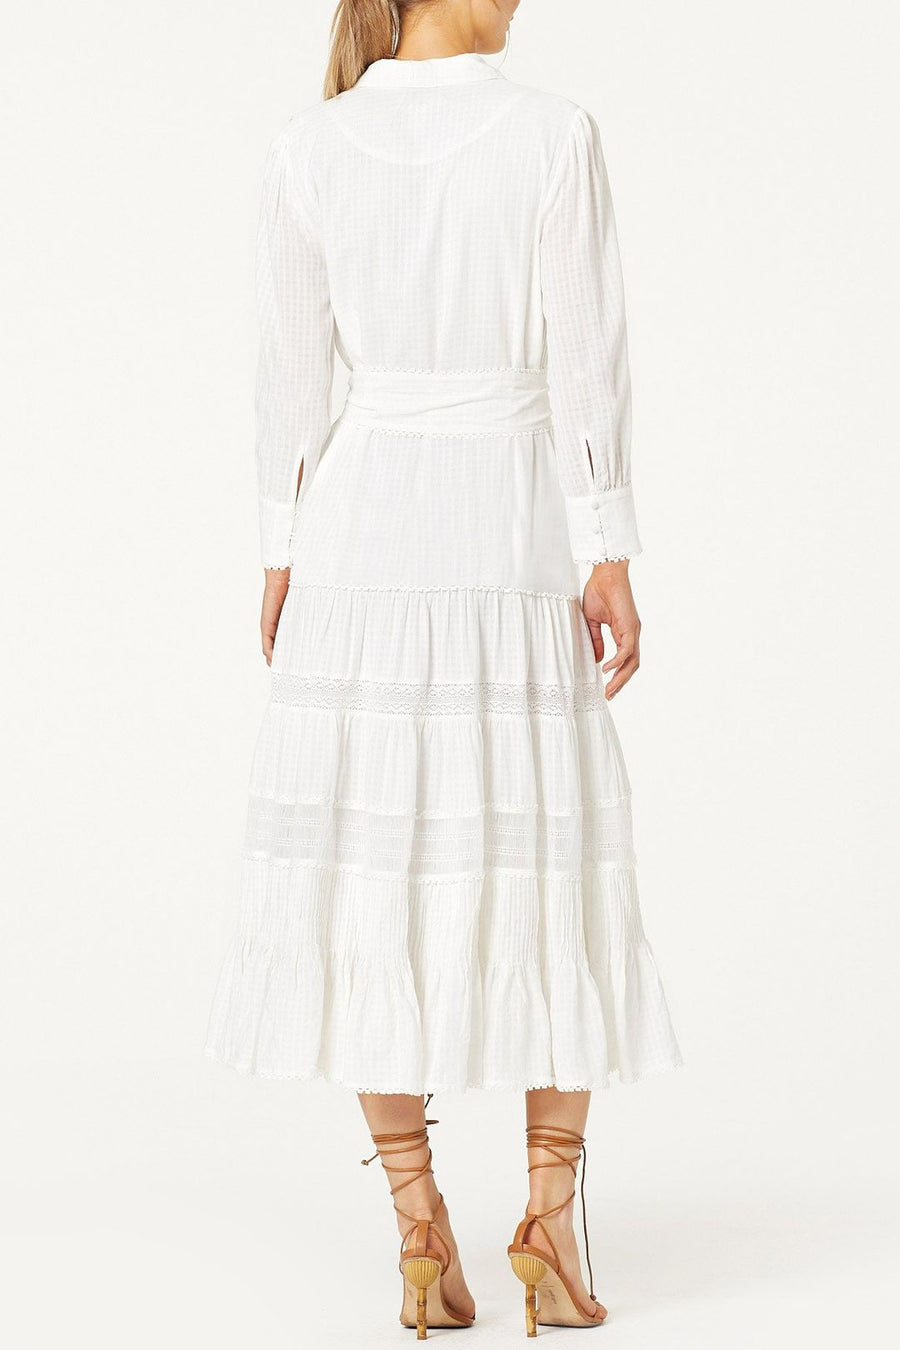 Stevie May Softly Midi dress White size S RRP $450